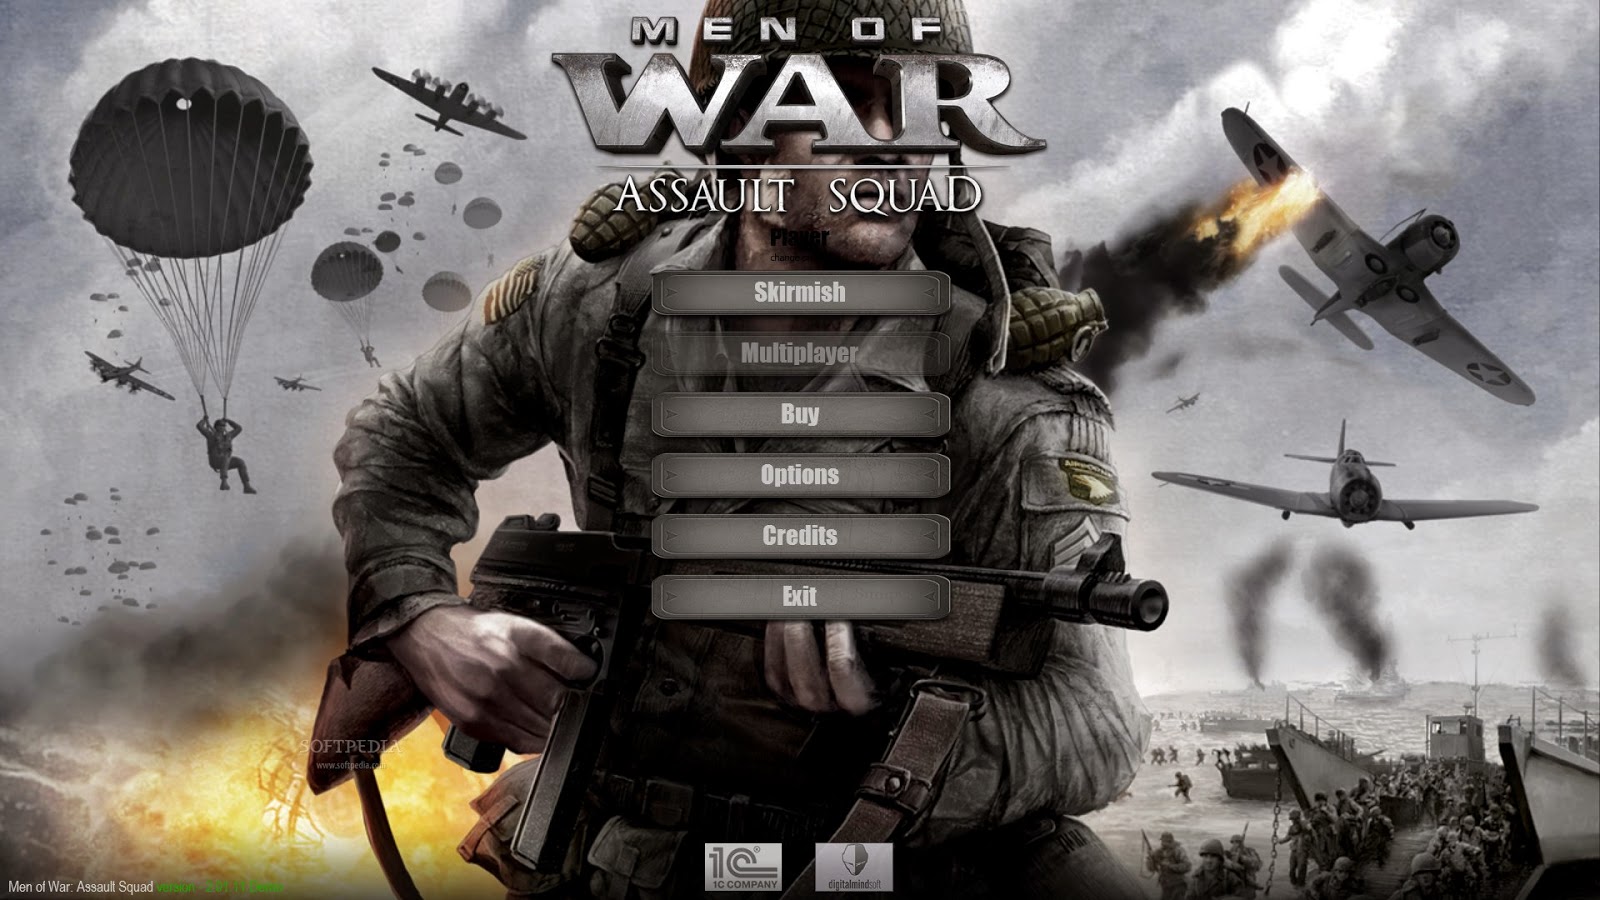 Men of War Assault Squad 2 Free Download Game - DownMatrix